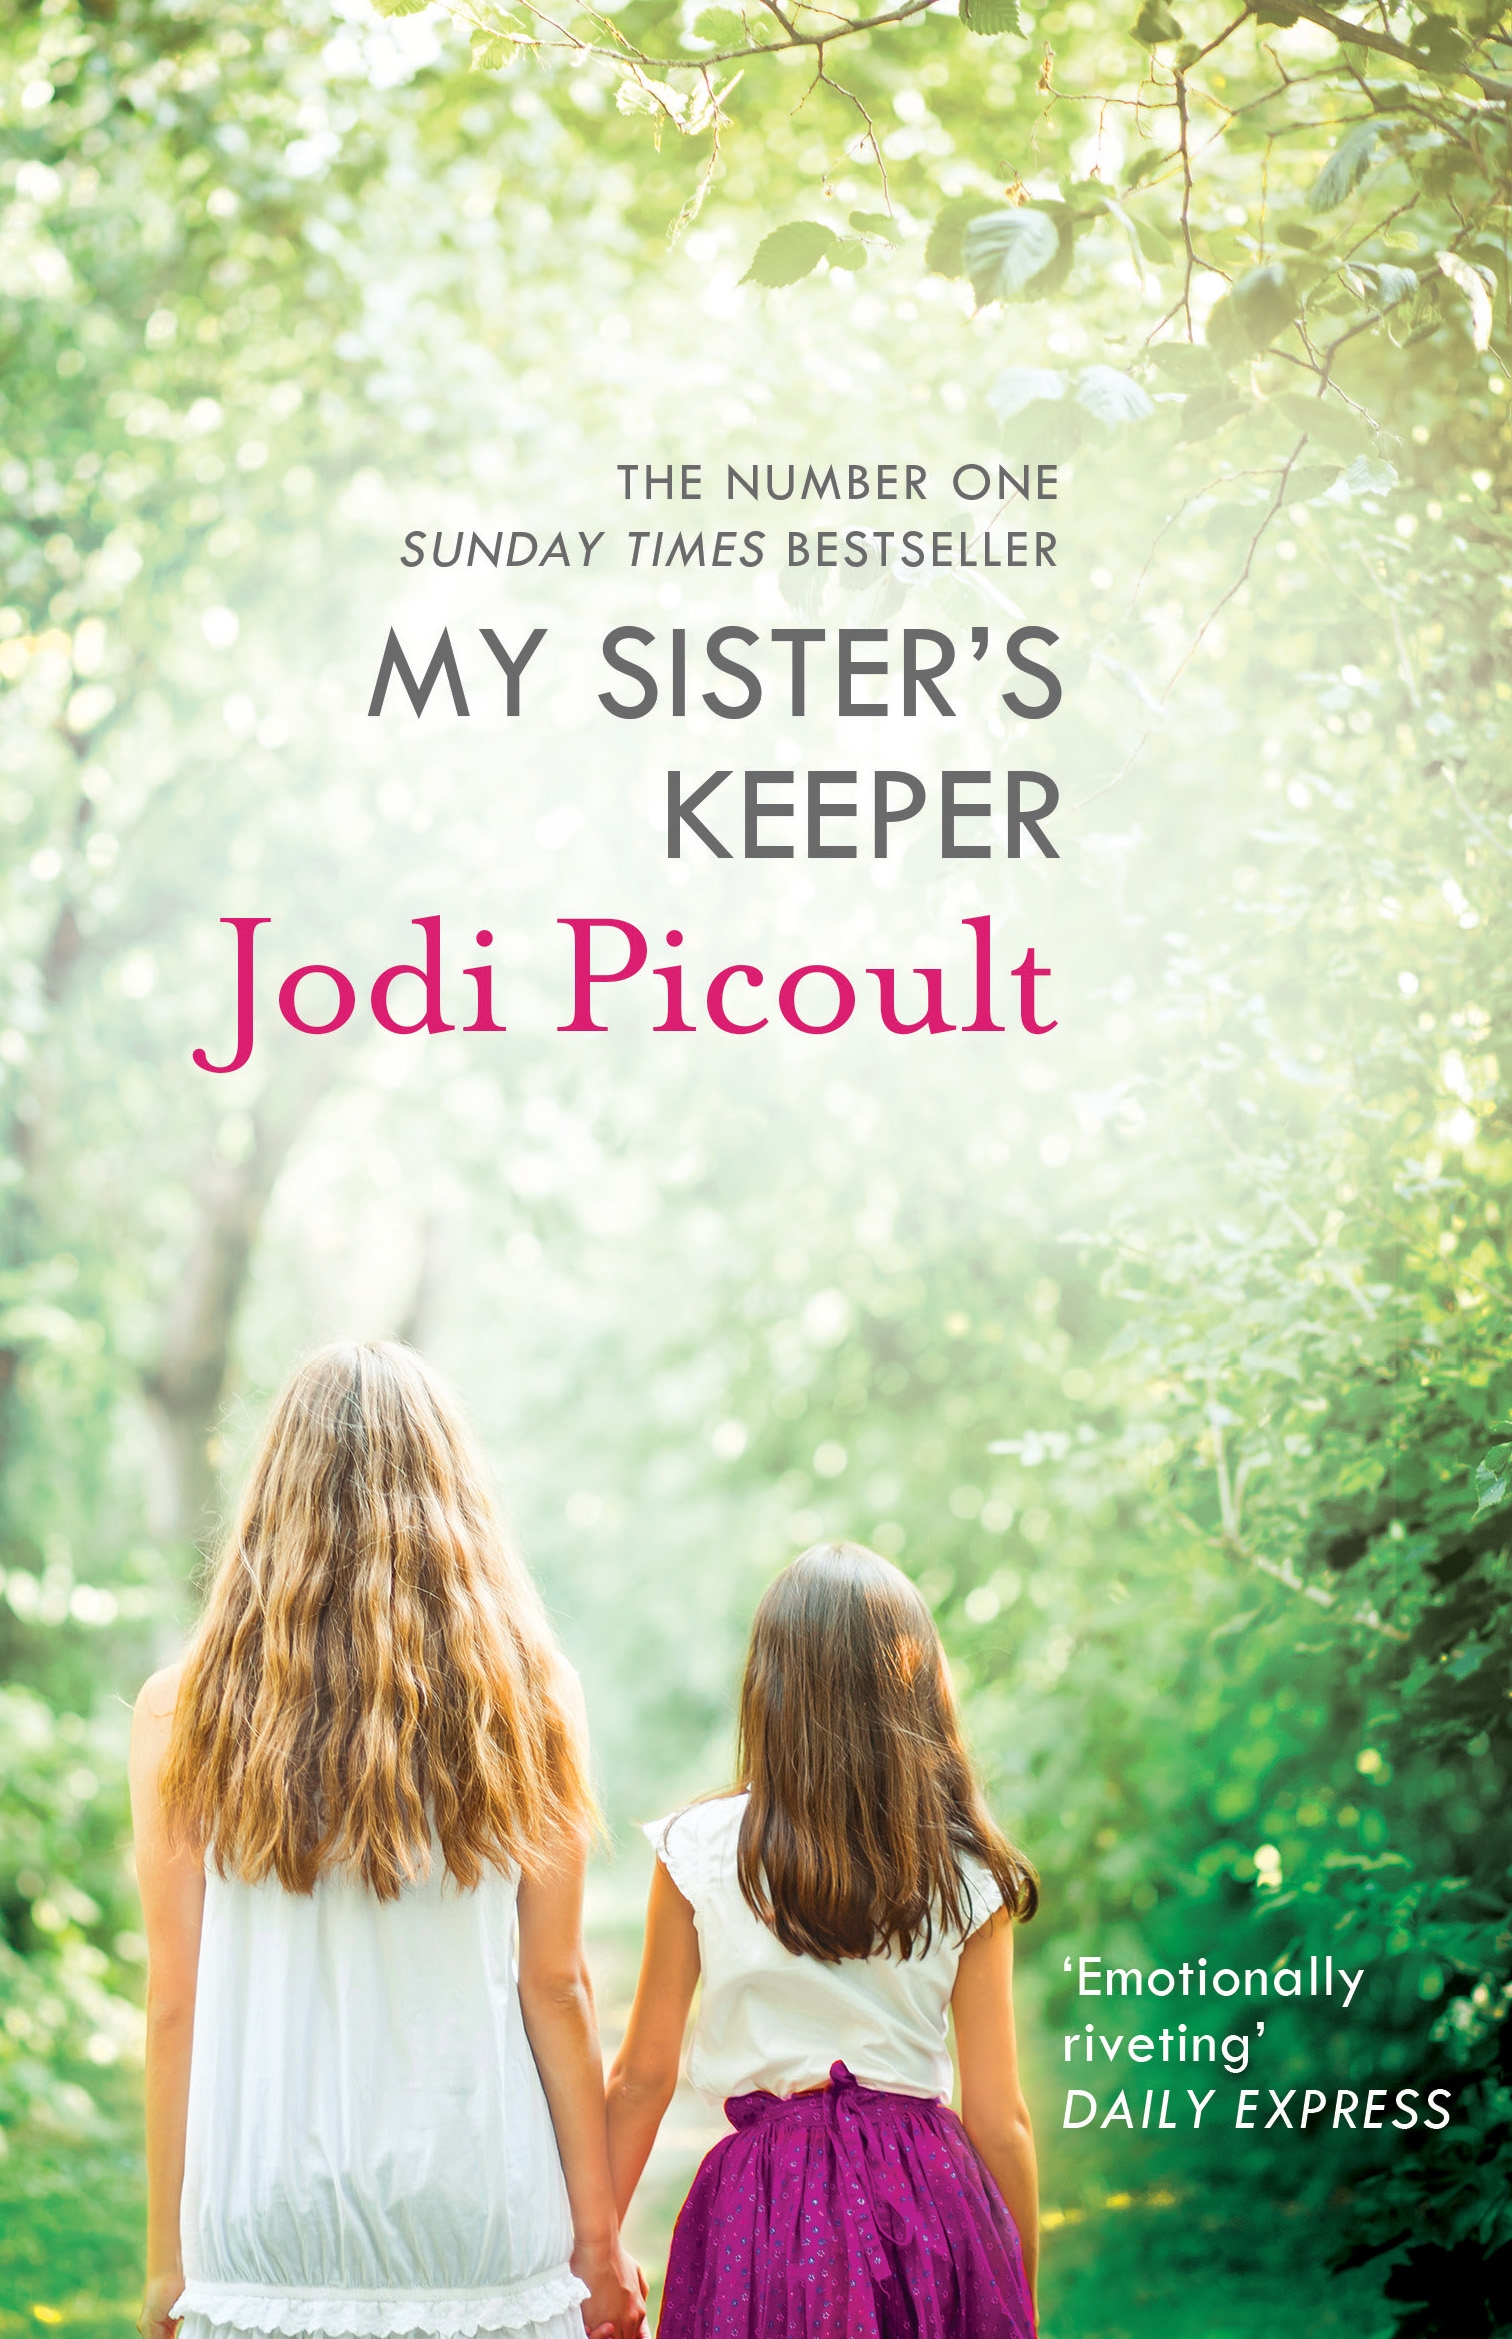 My sister has a book. My sister s Keeper. Джоди Пиколт ангел для сестры. Пиколт книги. Джоди Пиколт книги.